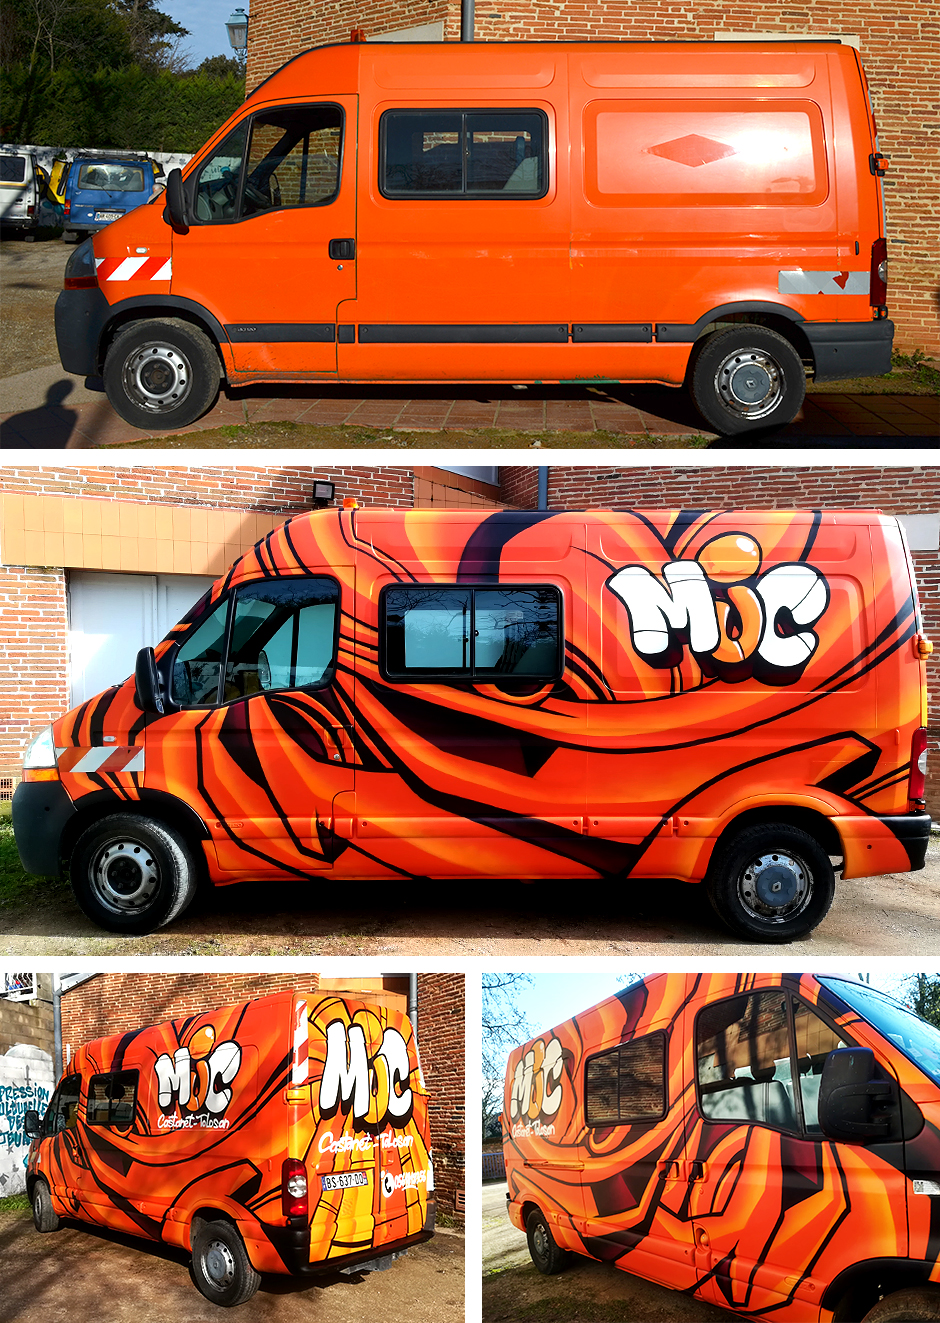 https://swiponer.com/wp-content/uploads/2020/11/decoration-graffiti-camio-toulouse-art-Swiponer-swip.jpg